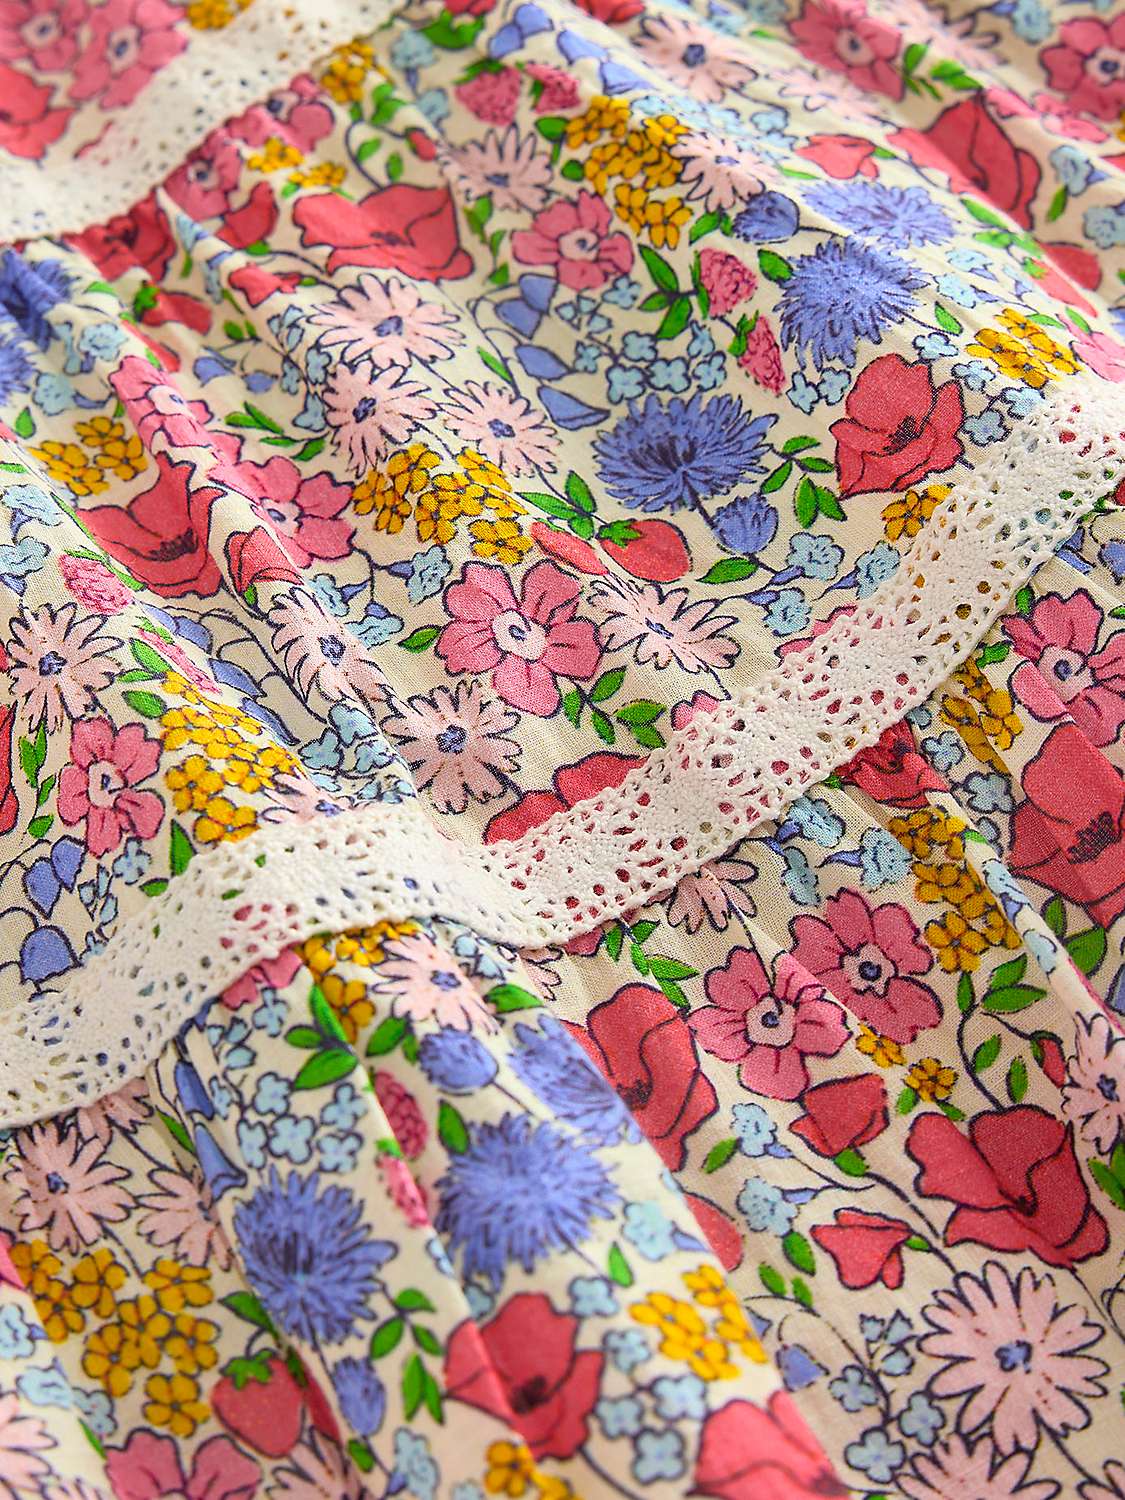 Buy Mini Boden Kids' Floral Midi Skirt, Bubblegum Peony Online at johnlewis.com